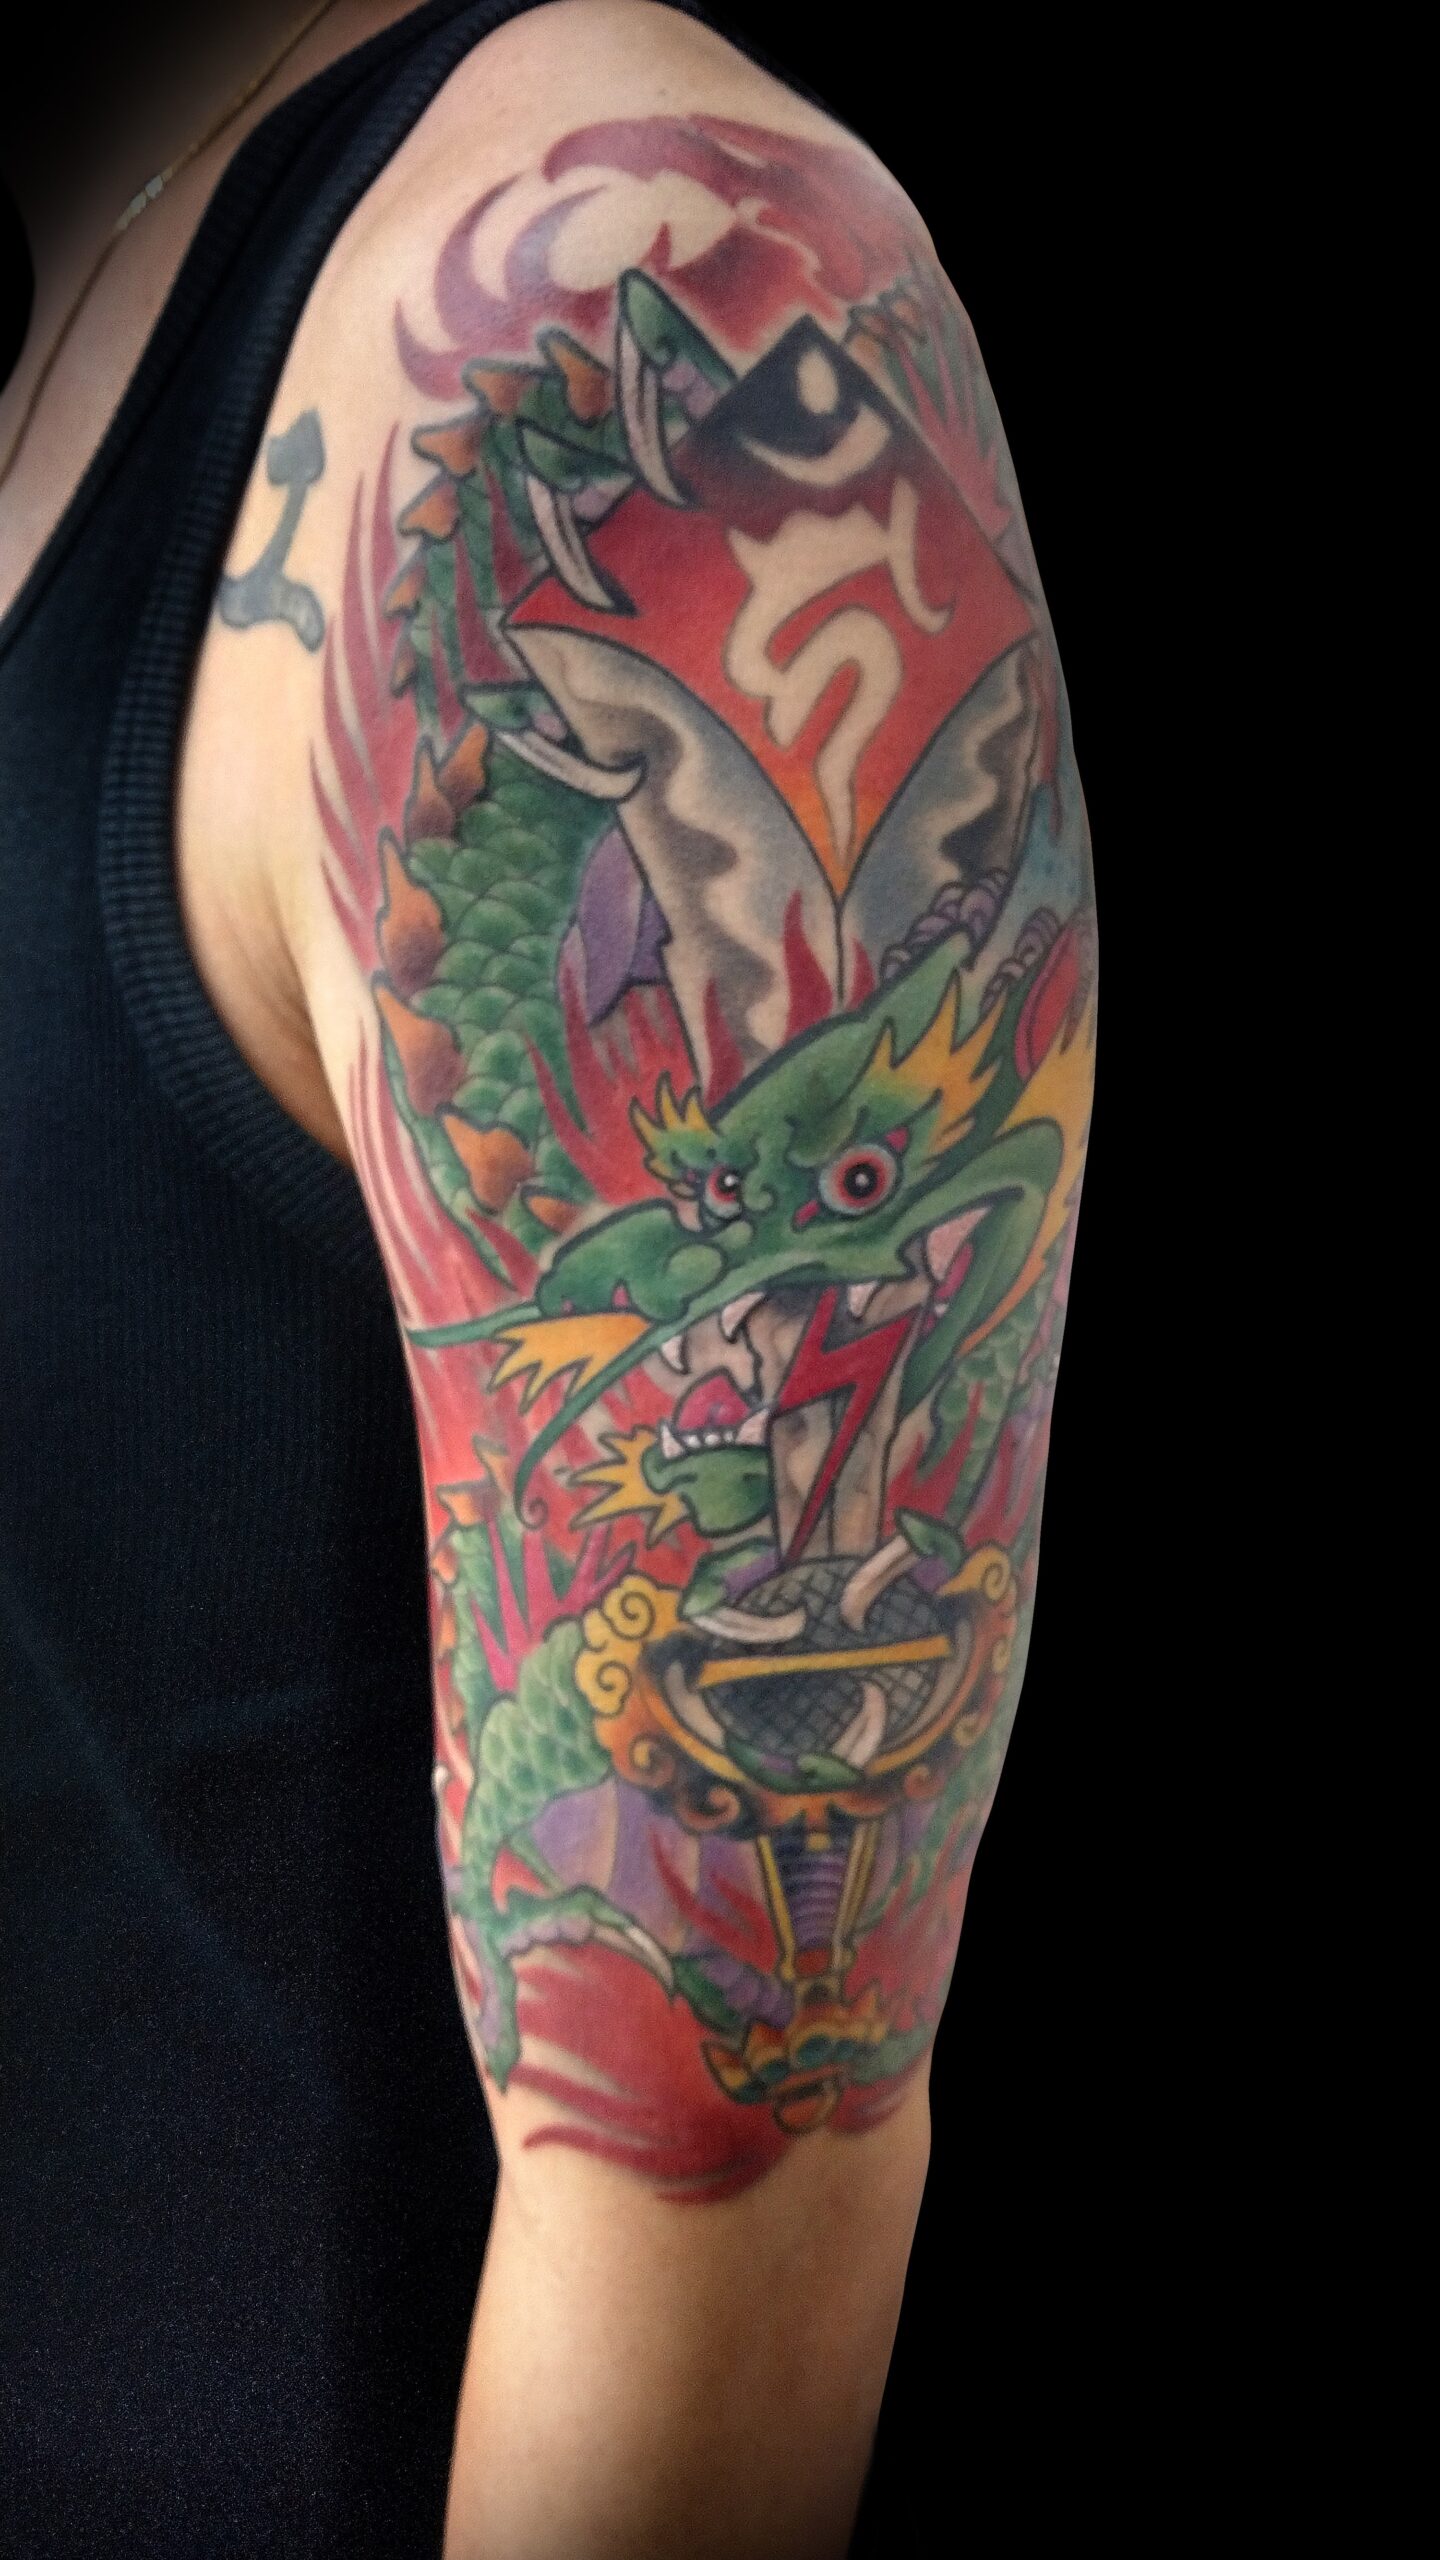 KING RAT TATTOO 作品 | LAVA gallery | Tattoo artist: Yuji Anai | キングラット | ラバギャラリー | タトゥーアート | 福岡県北九州市 | shoulder01 202107